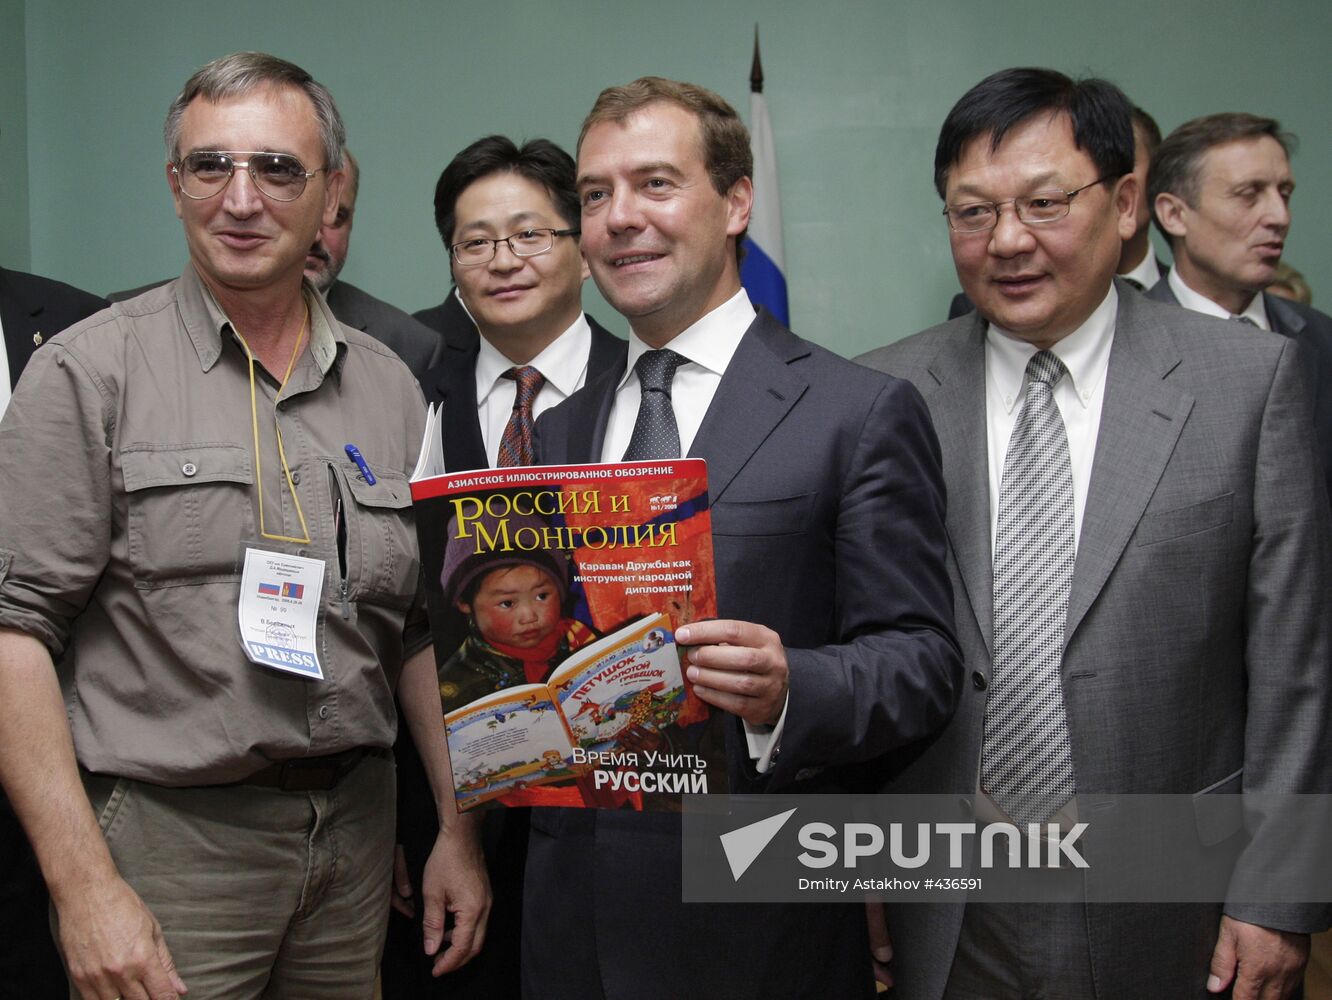 Dmitry Medvedev visits Russian Center in Ulan Bator